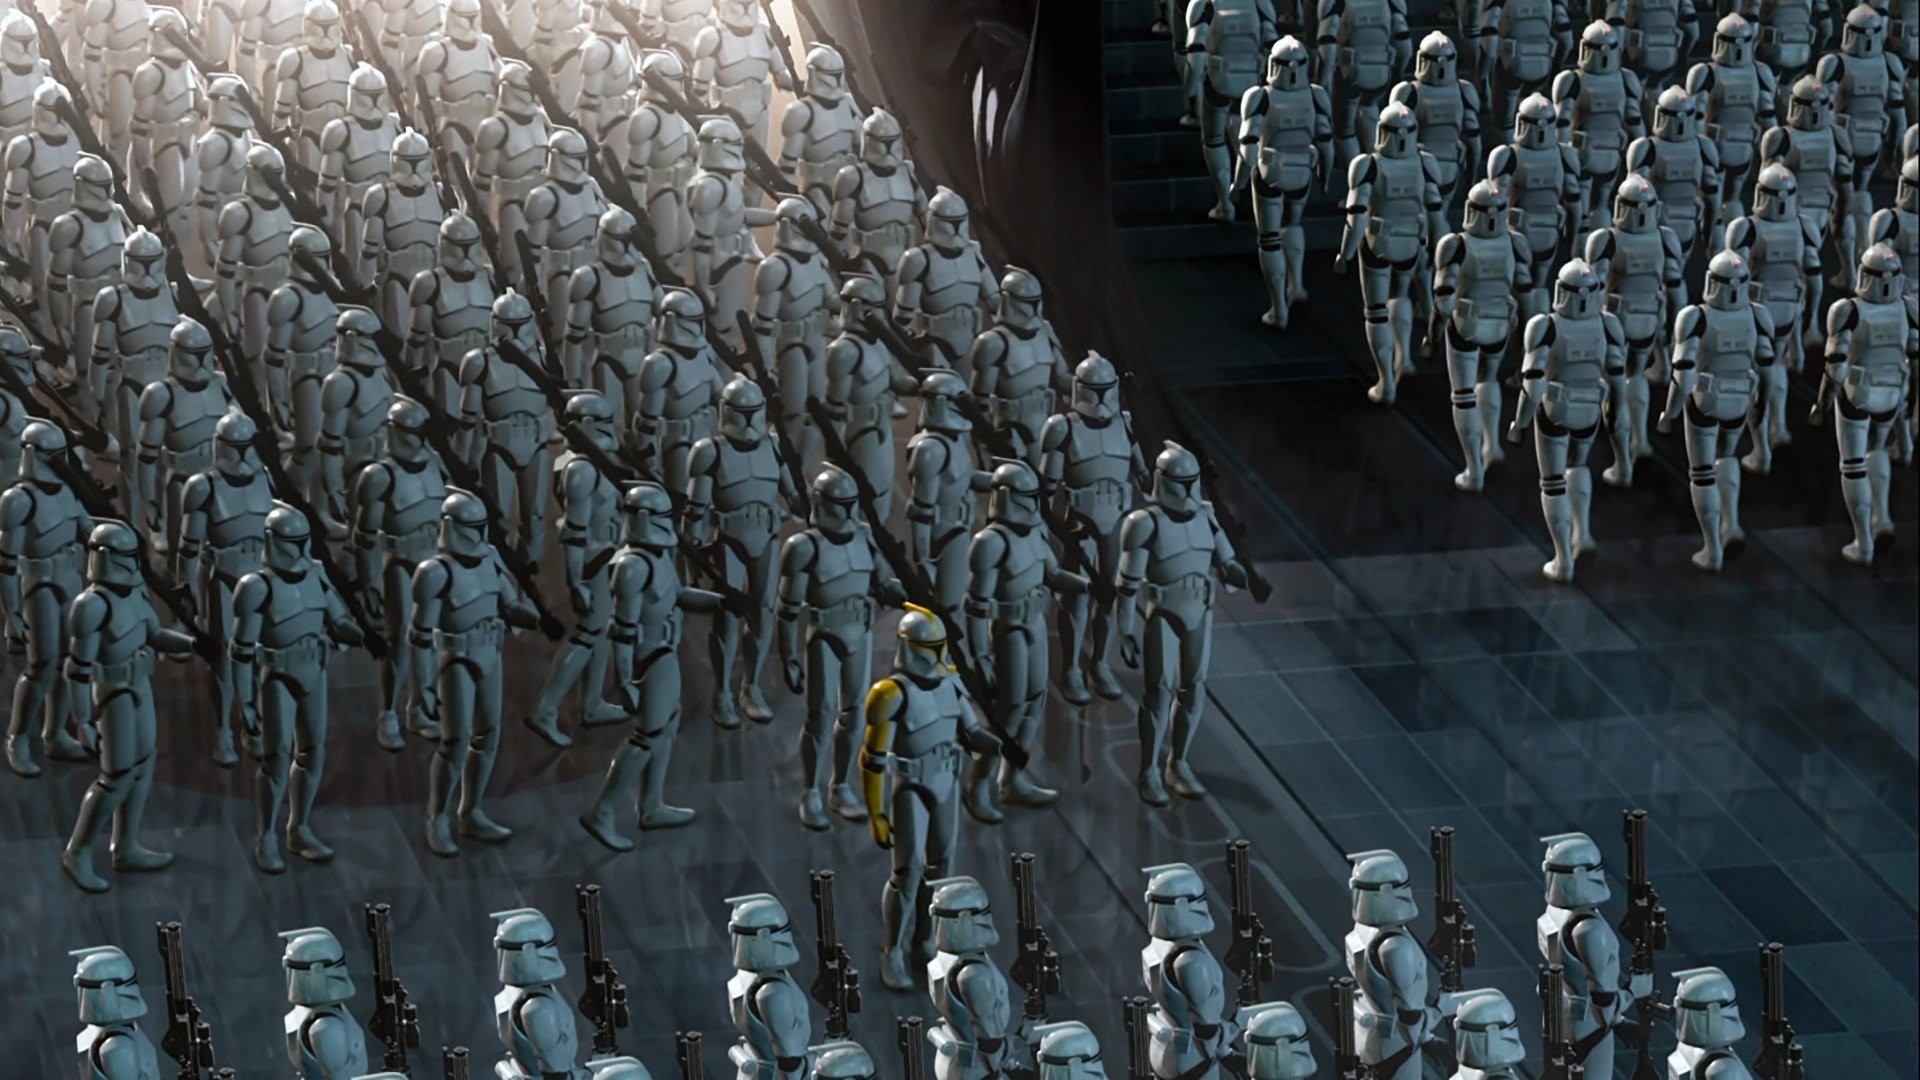 clone trooper phase 3 wallpaper hd